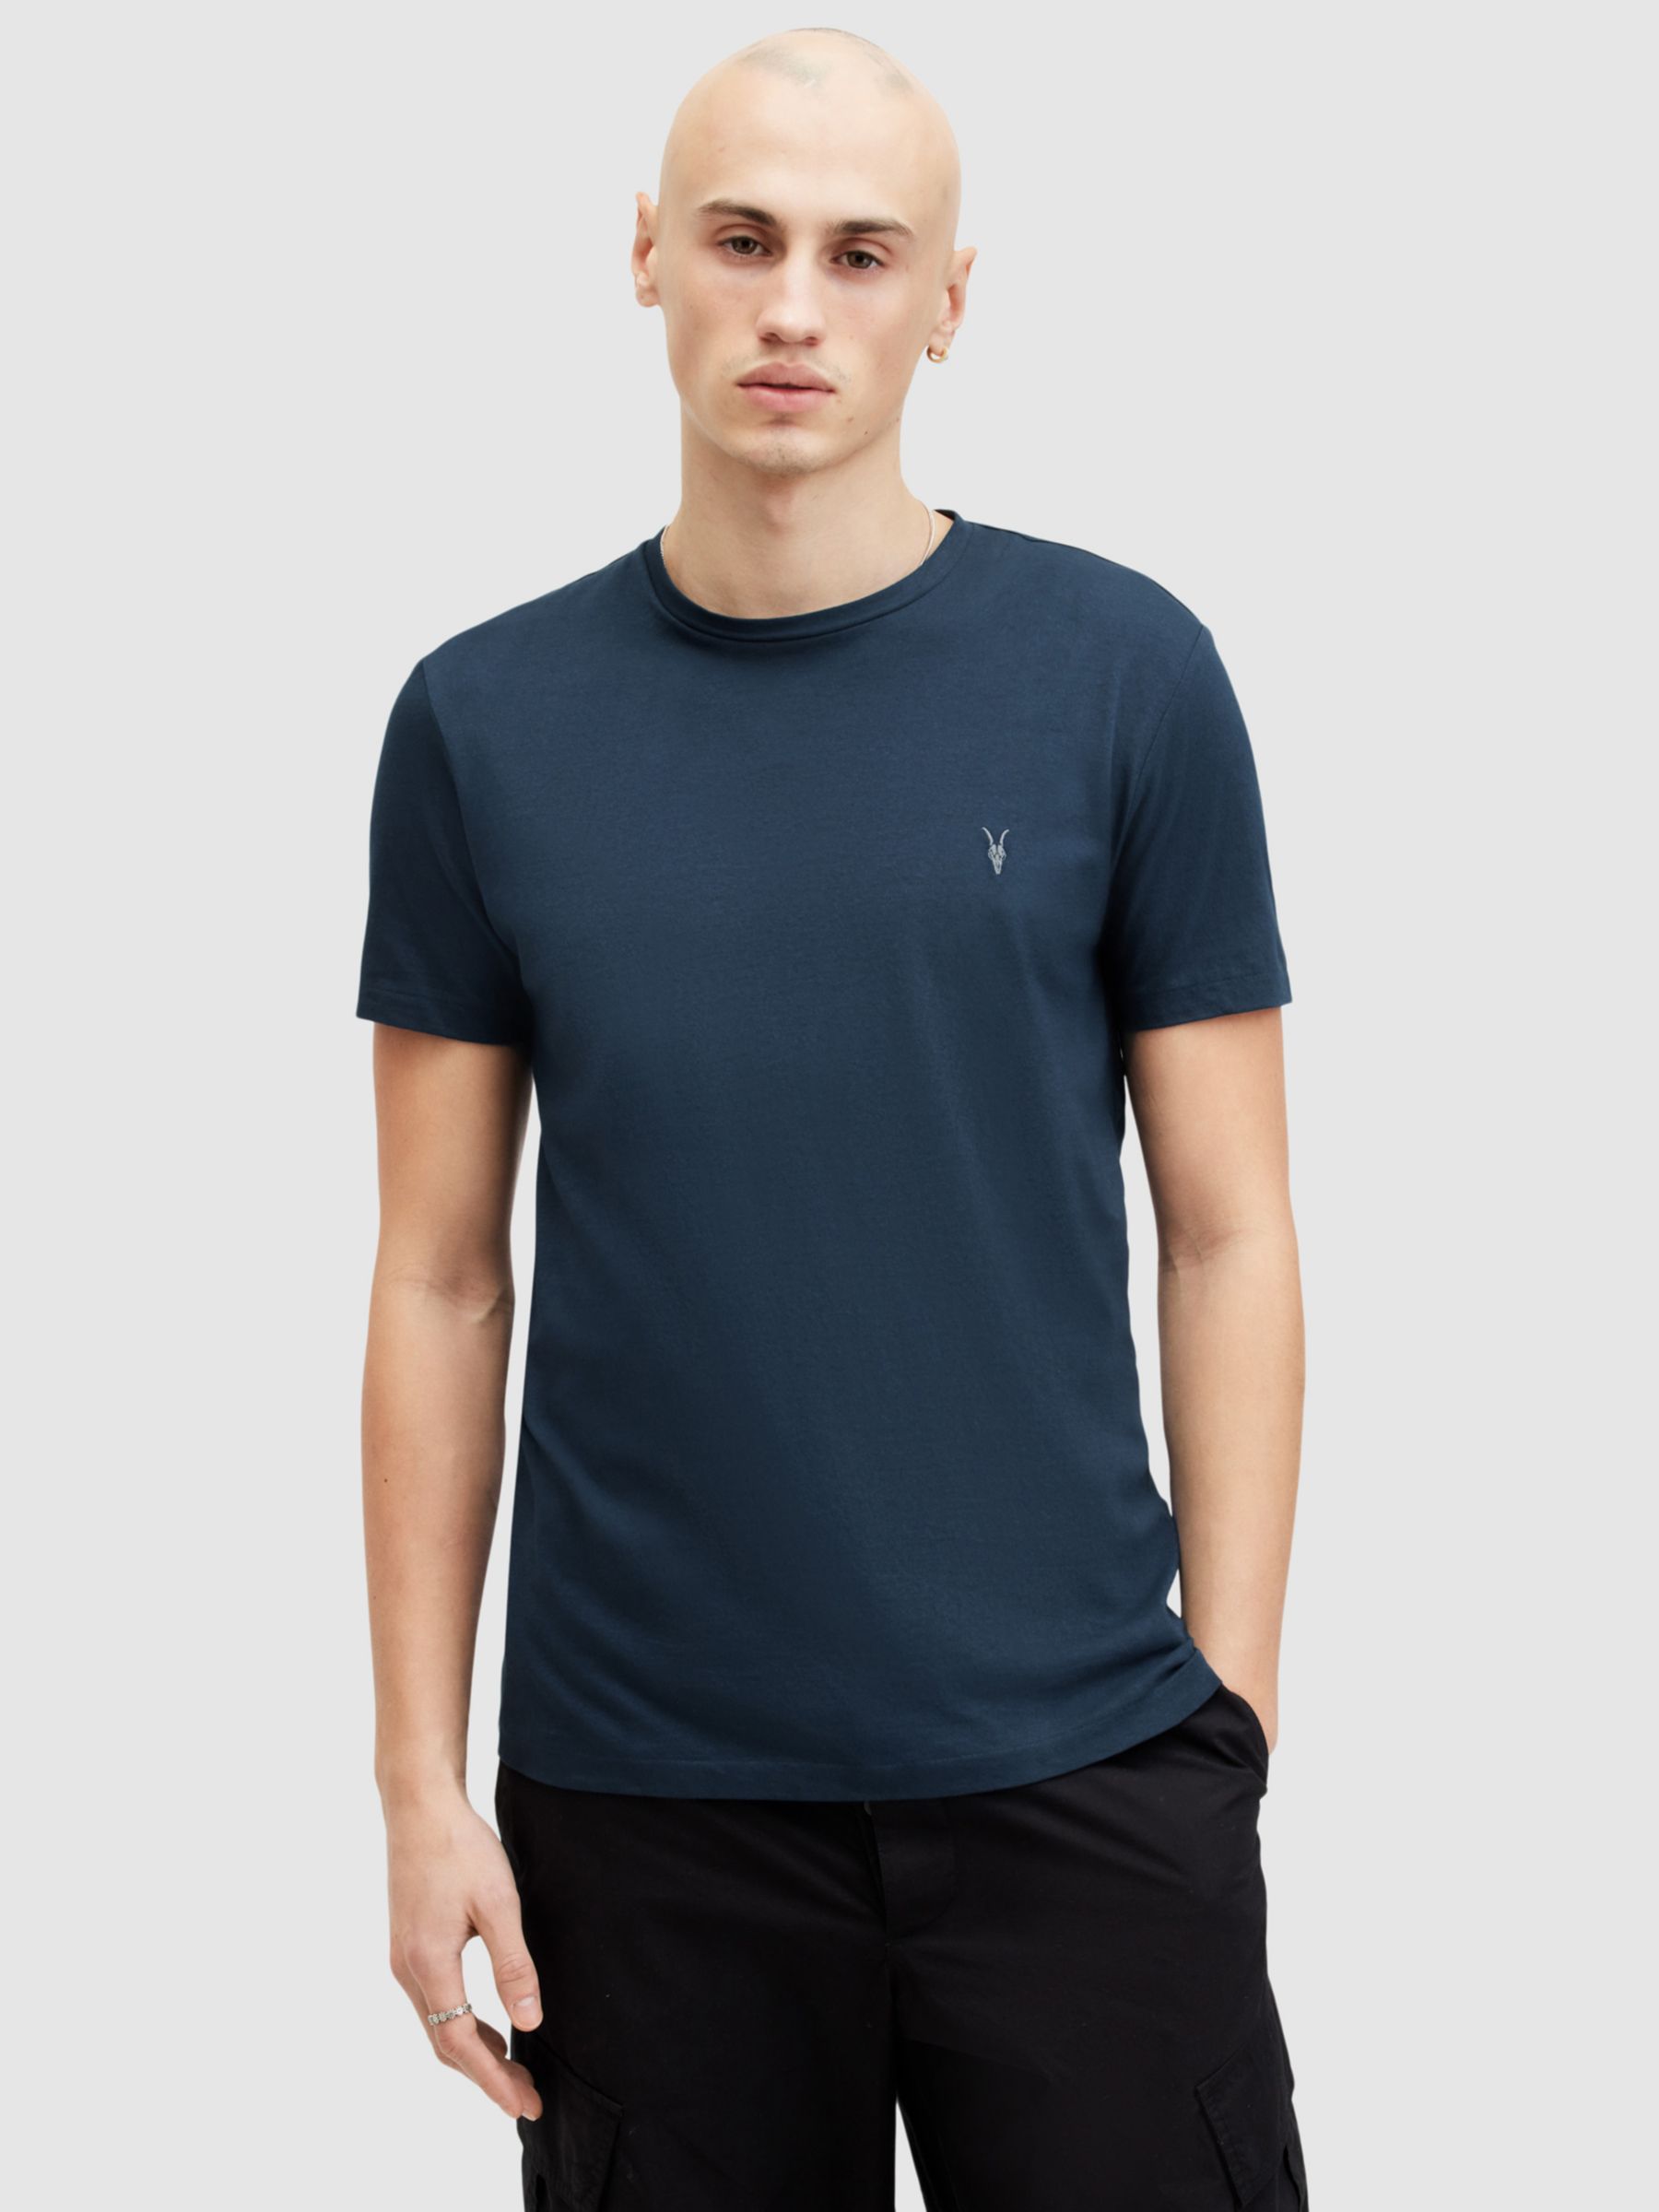 Buy AllSaints Tonic T-Shirt, Pack of 3 Online at johnlewis.com